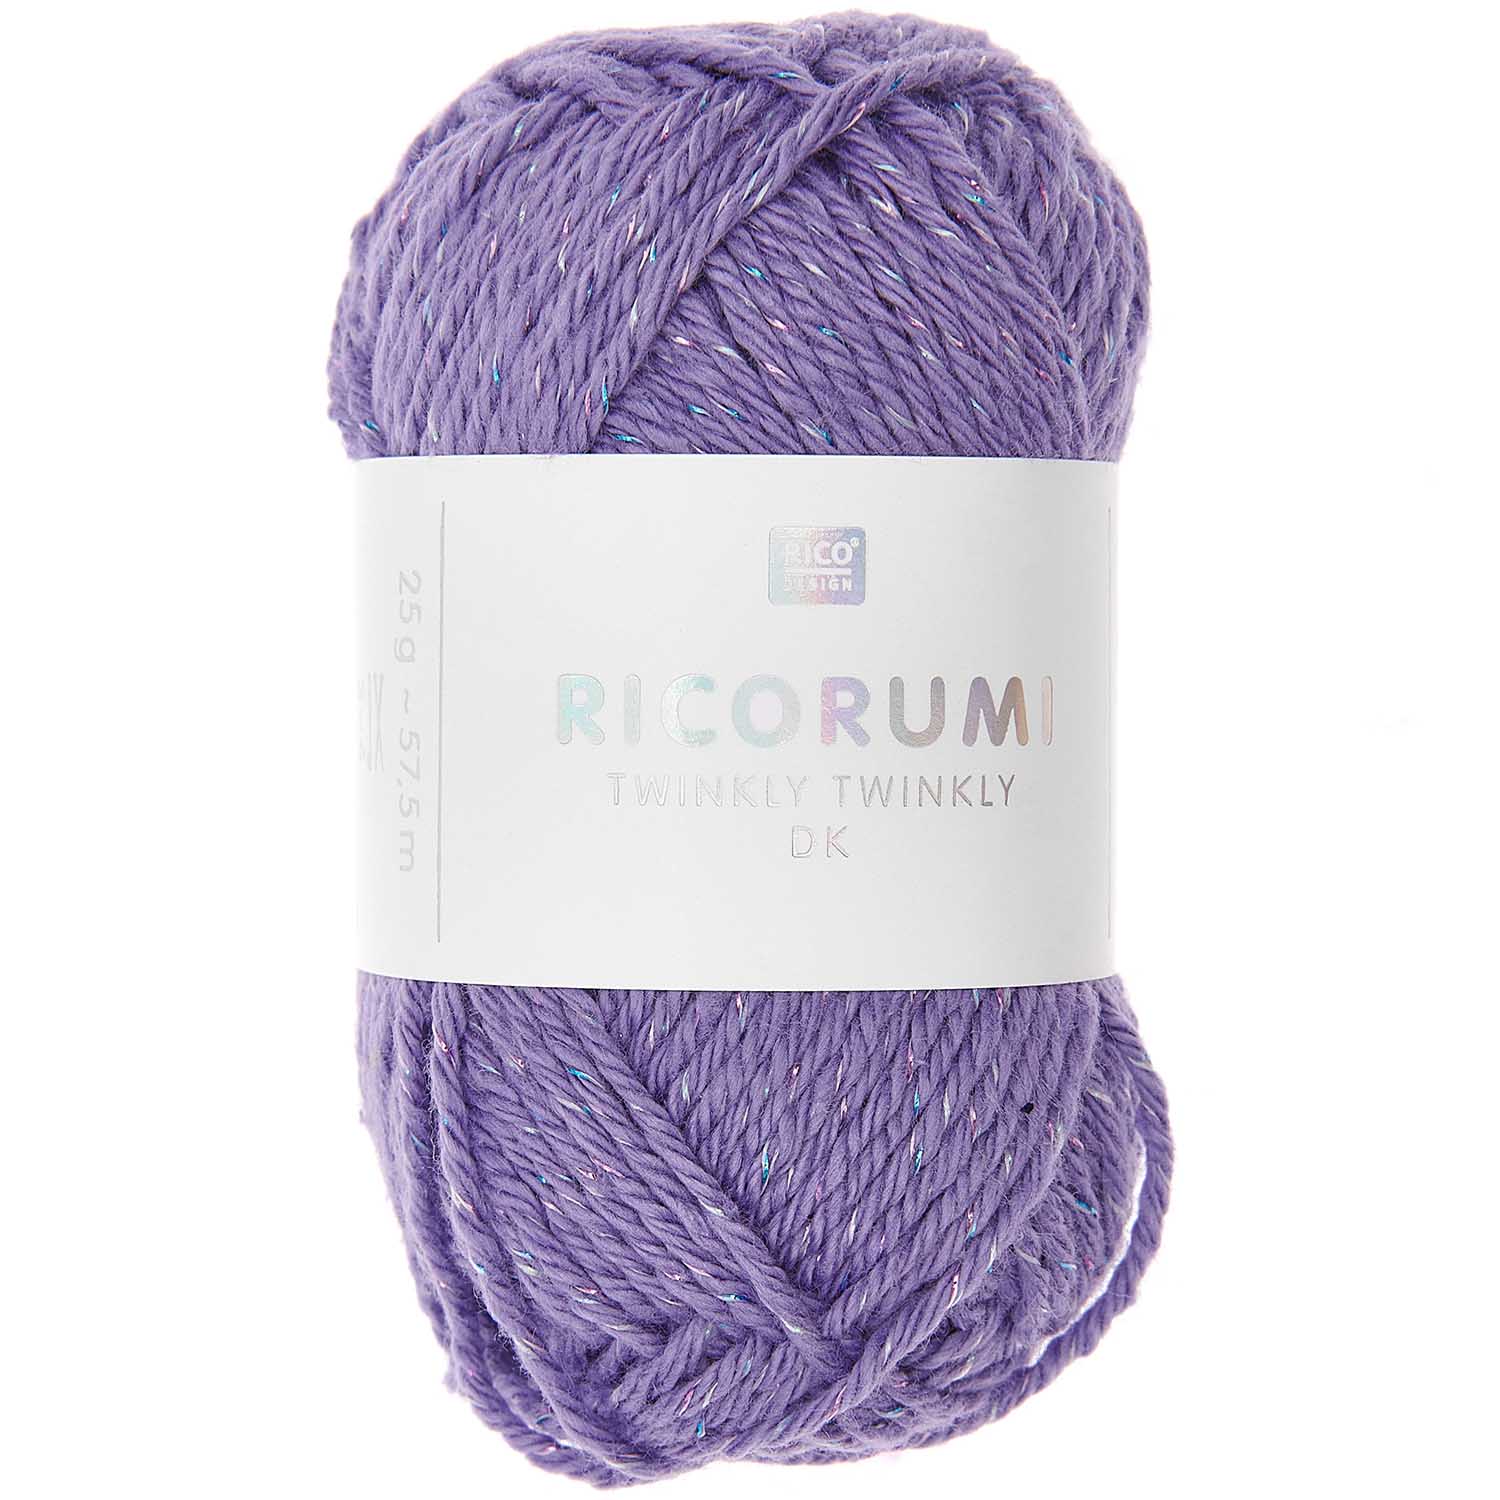 Rico Design Ricorumi Twinkly Twinkly DK Knitting Crochet Yarn